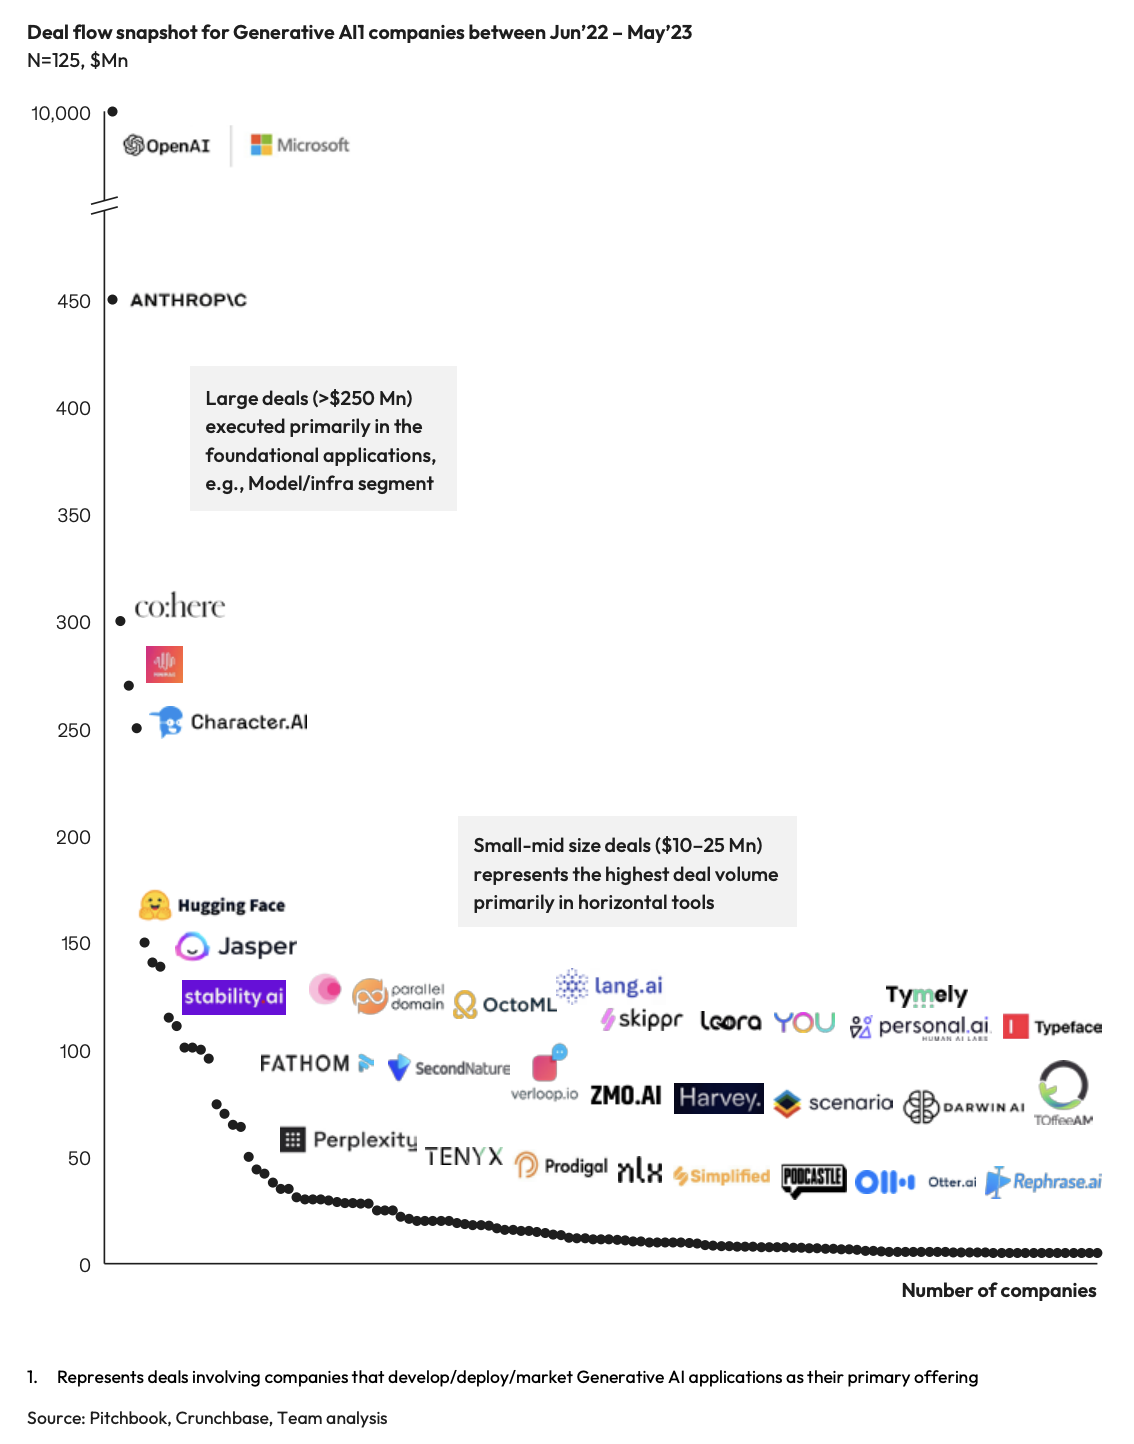 A graph representing representing deal flows for Generative AI between June 2022-May' 23